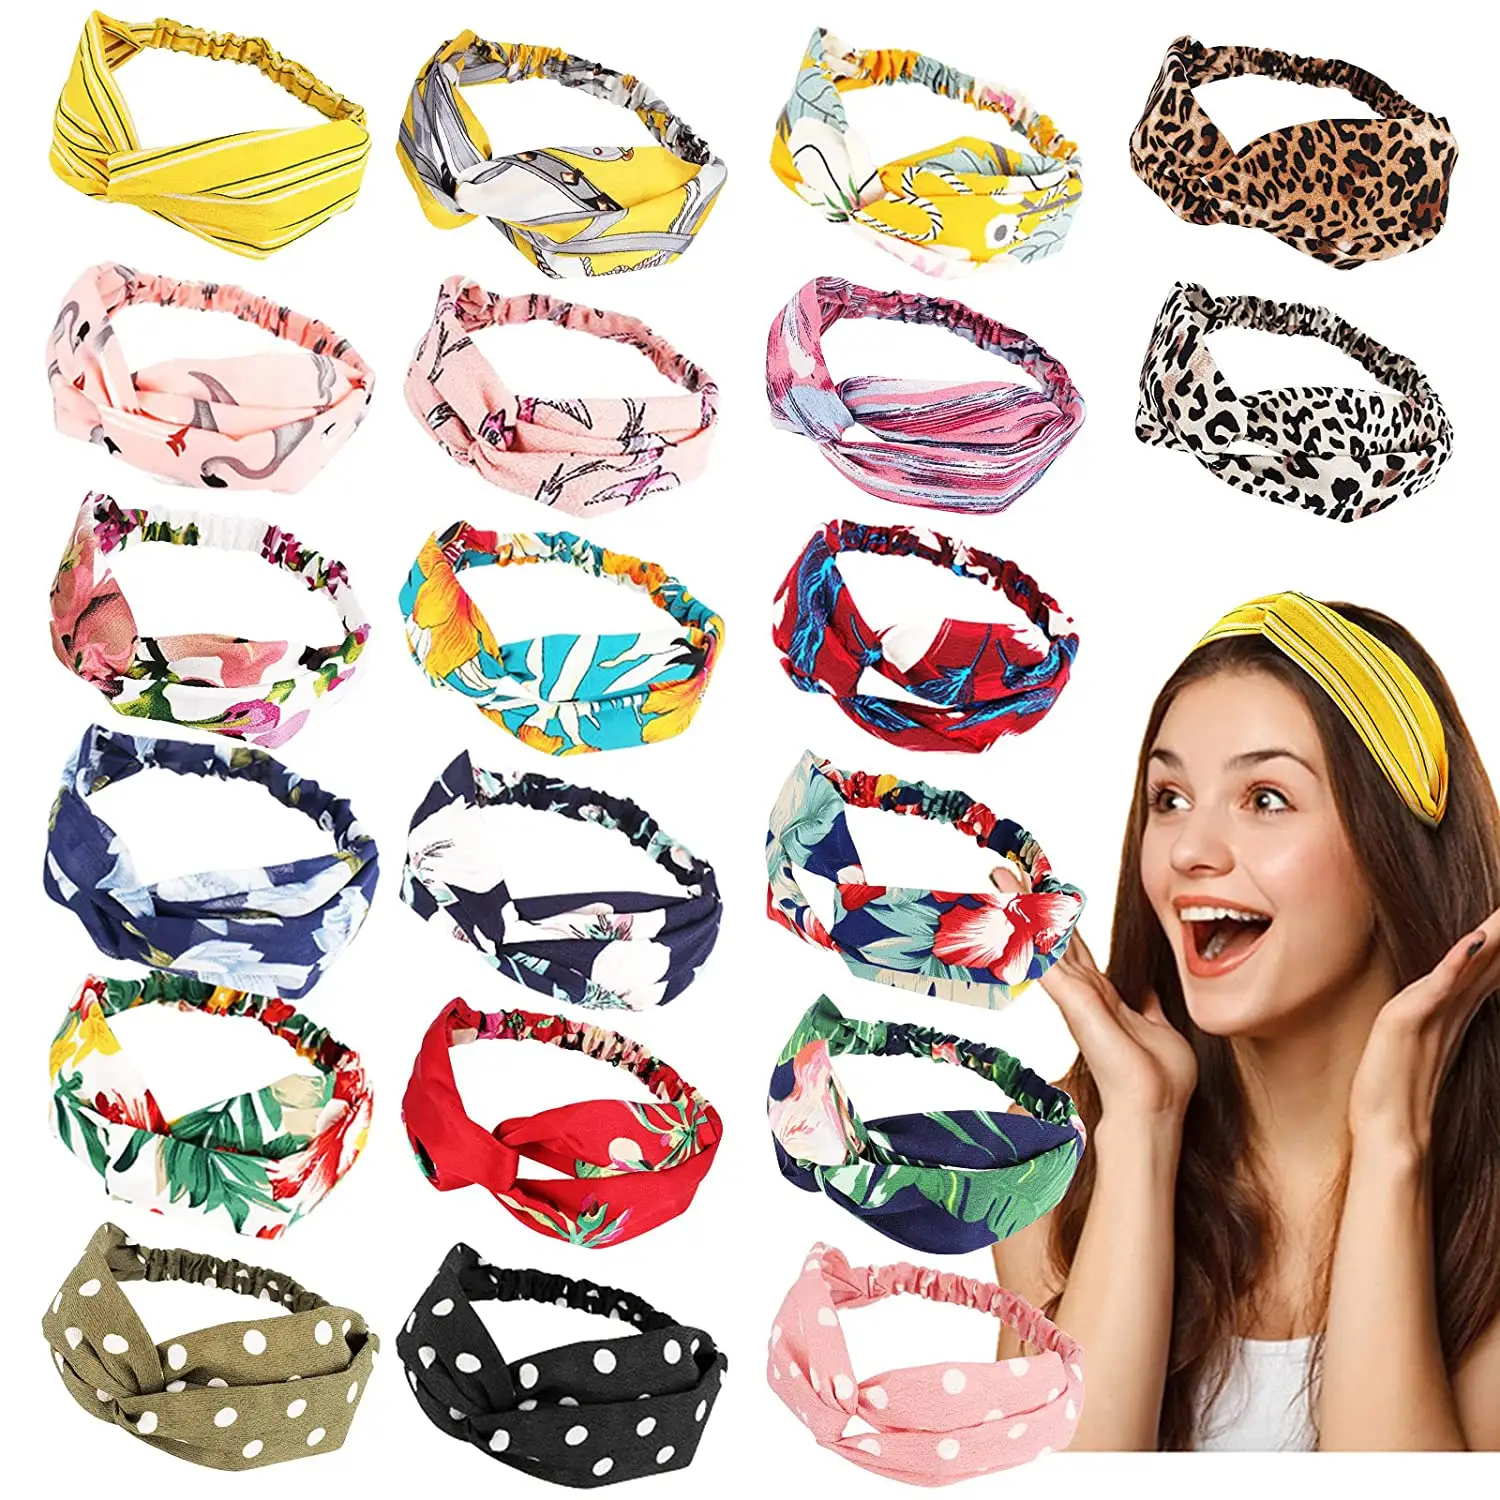 Fashion Headbands Silk Knot Headband Elastic Hair Bands Head Bands Turban Headband Hair Styling Hair Accessories for Women